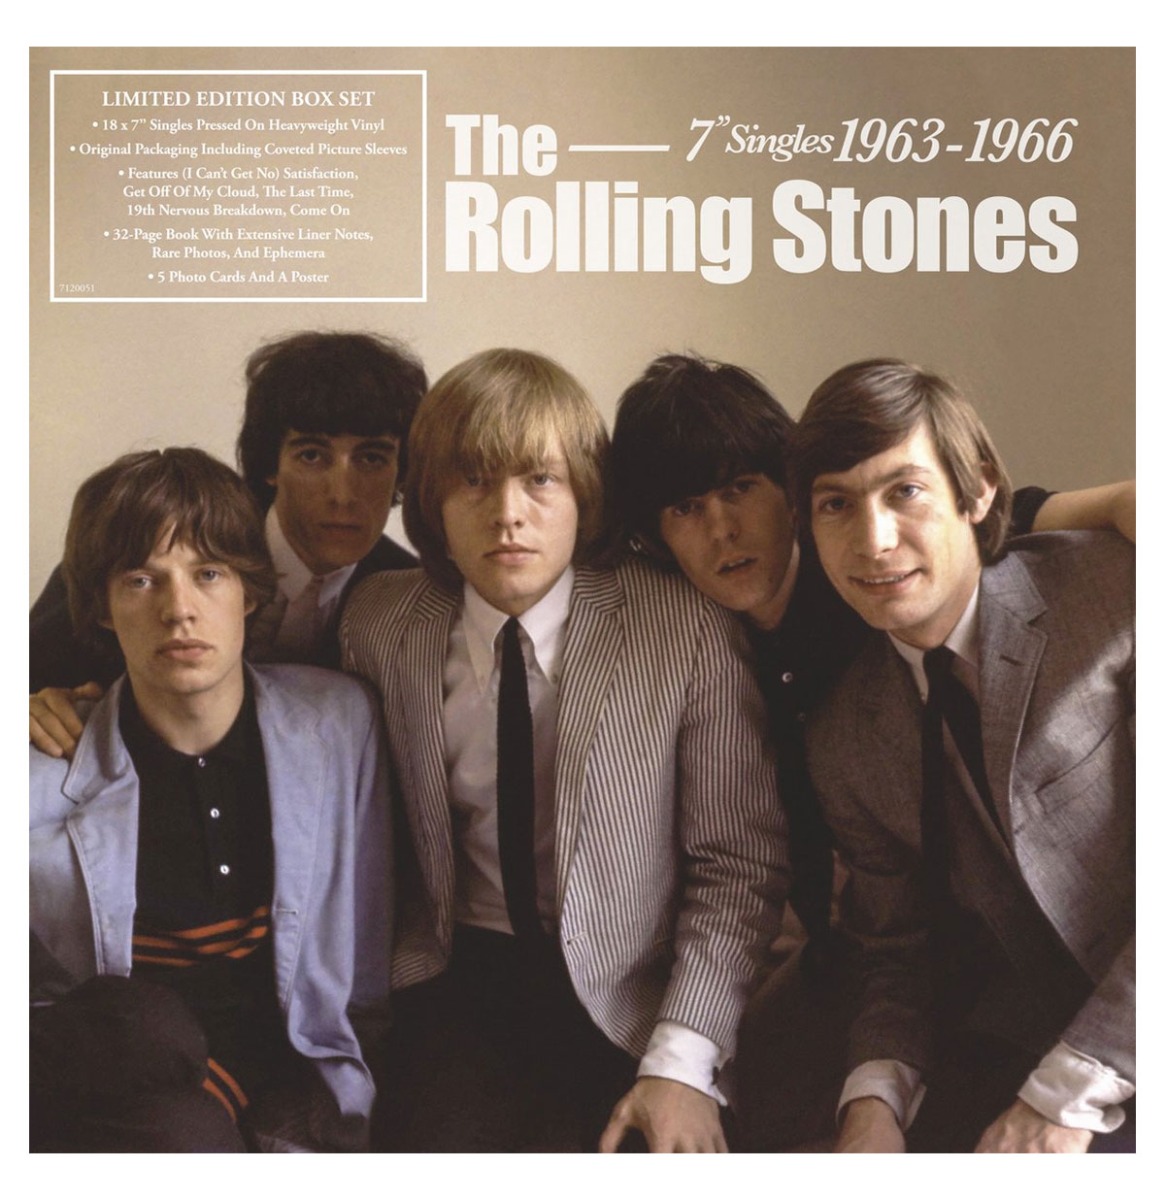 The Rolling Stones - 7" Singles 1963-1966 Box - Beperkte Editie Box Set